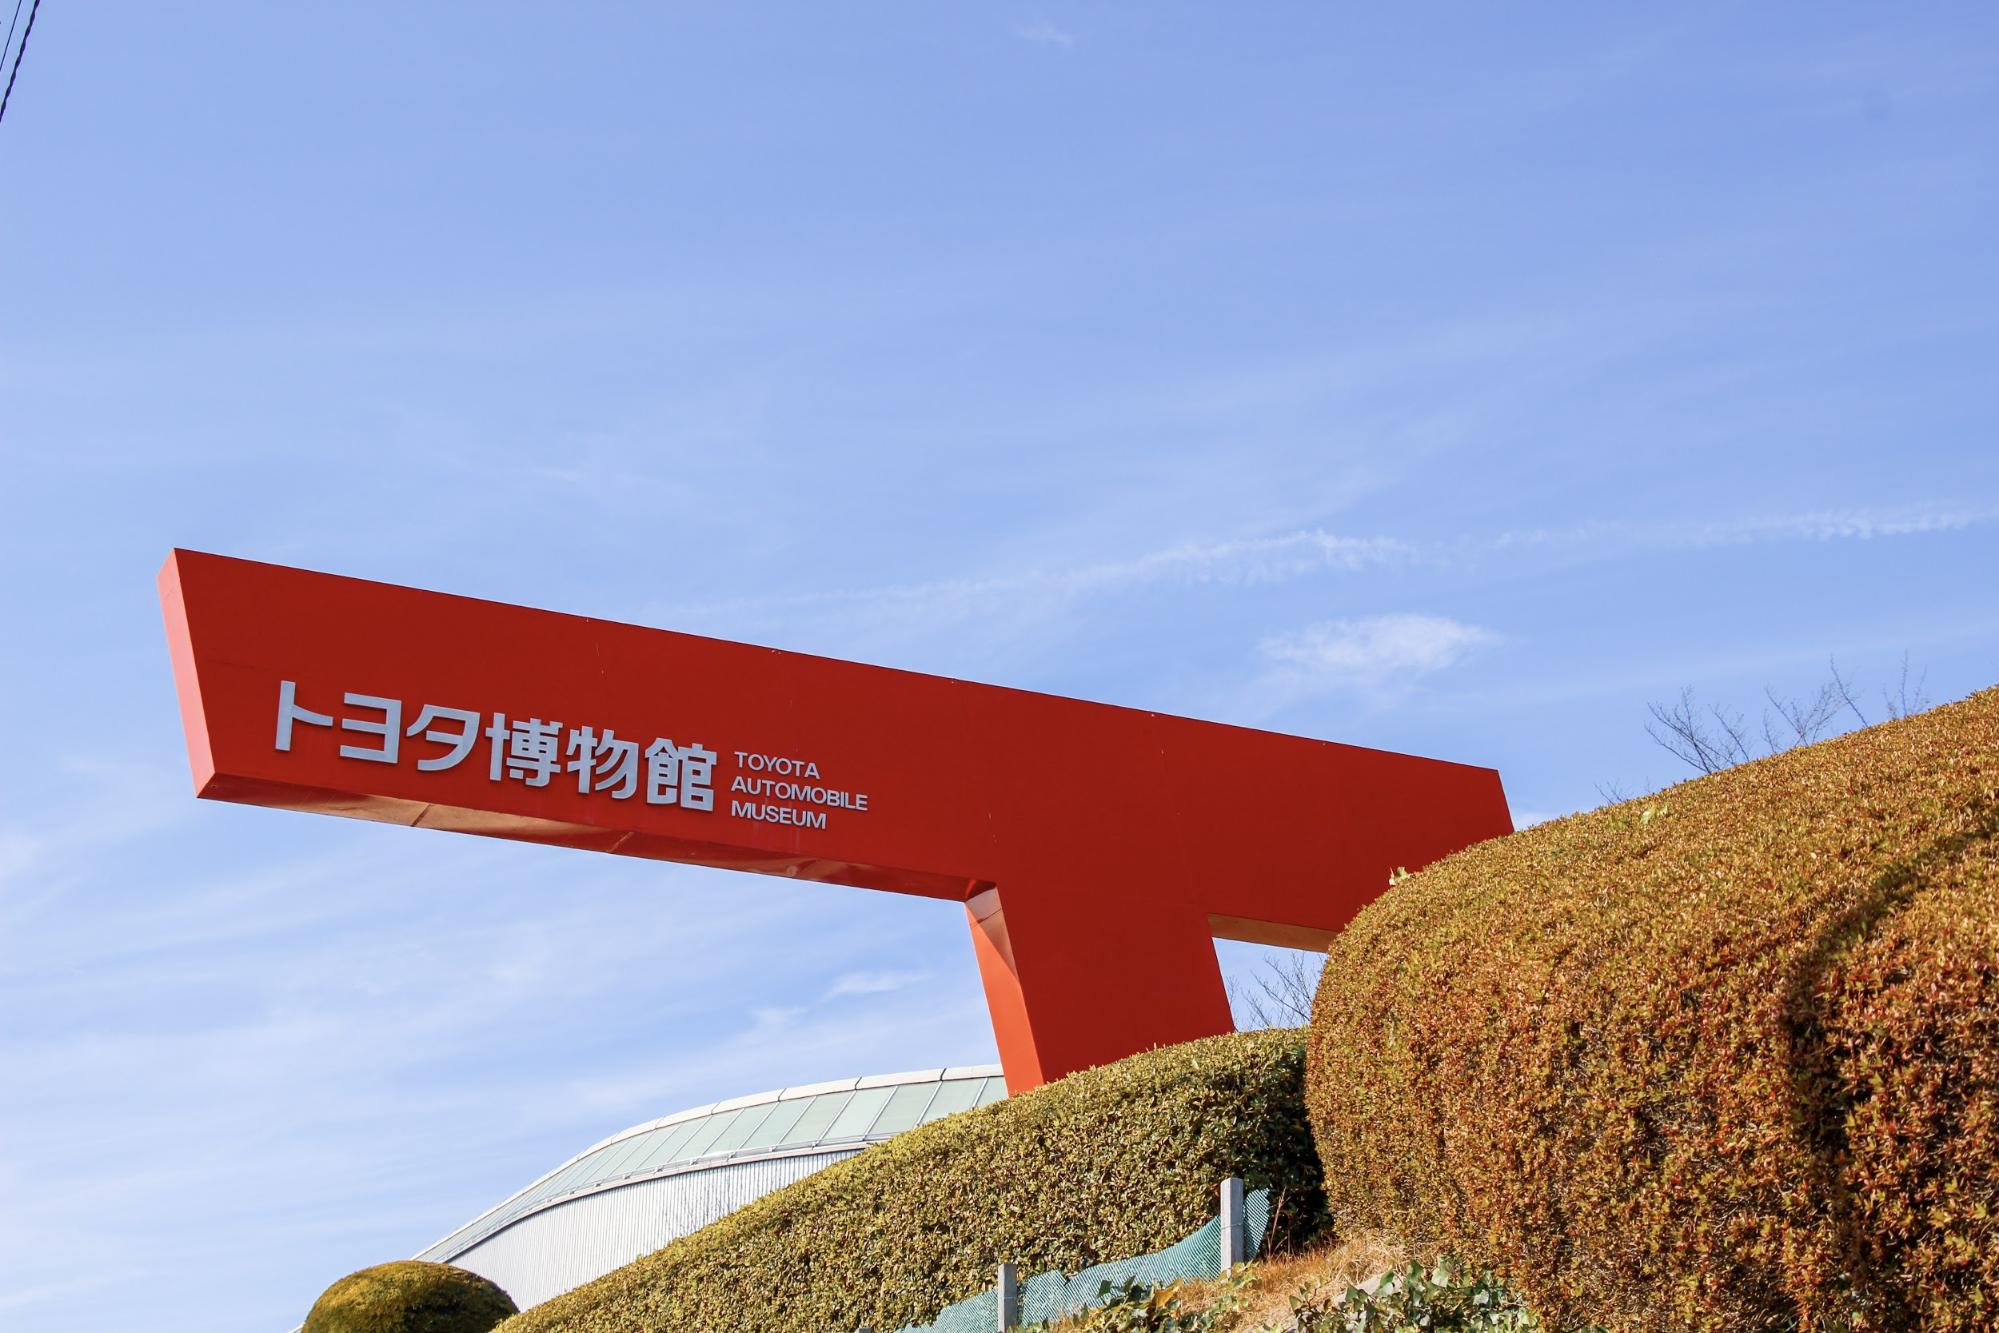 Toyota Automobile Museum sign